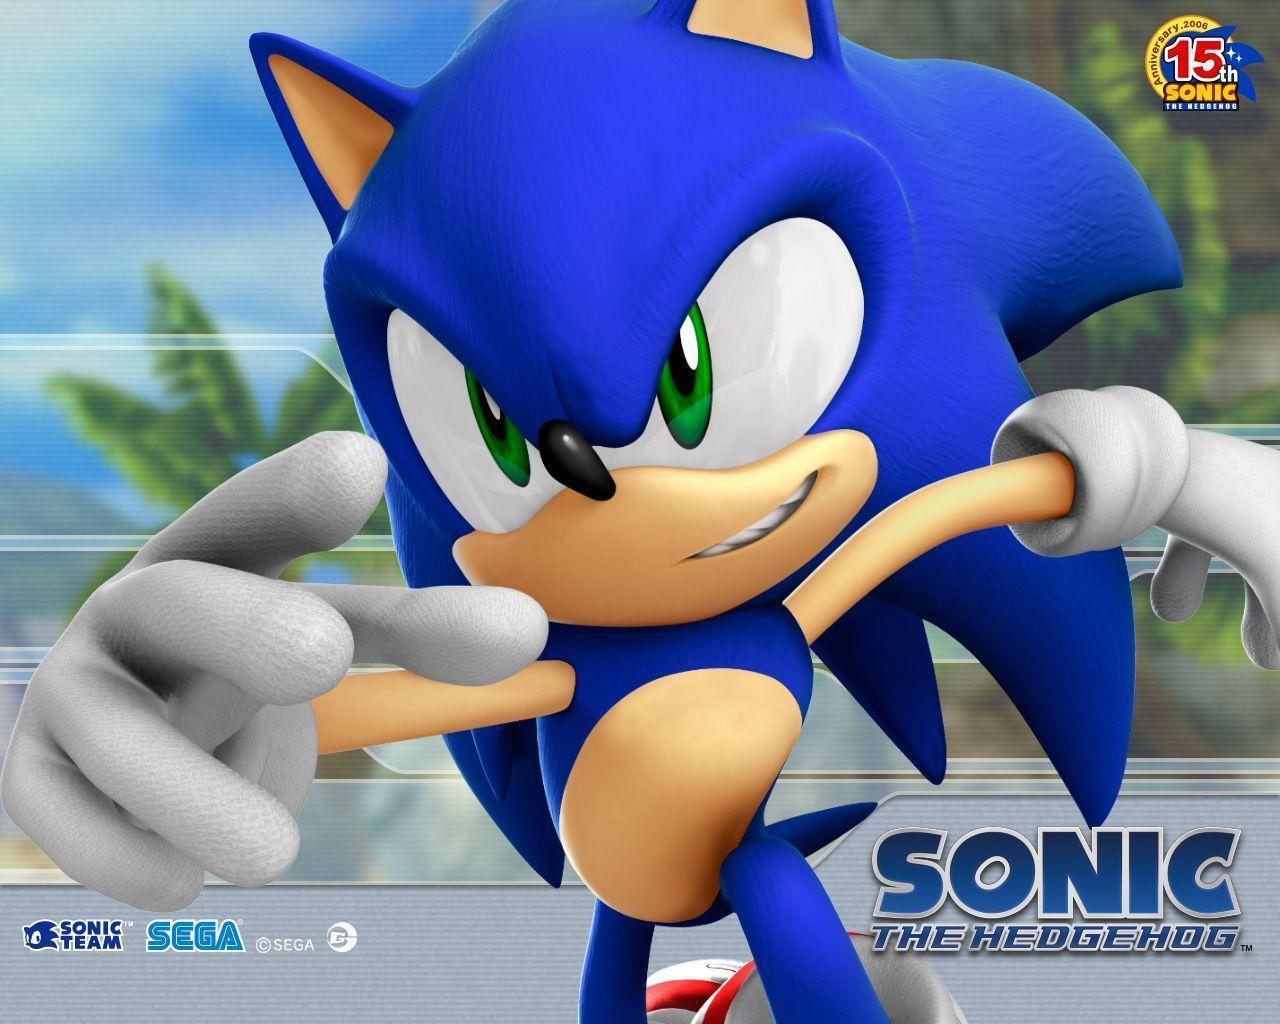 Sonic The Hedgehog Wallpaper. Sonic News Network